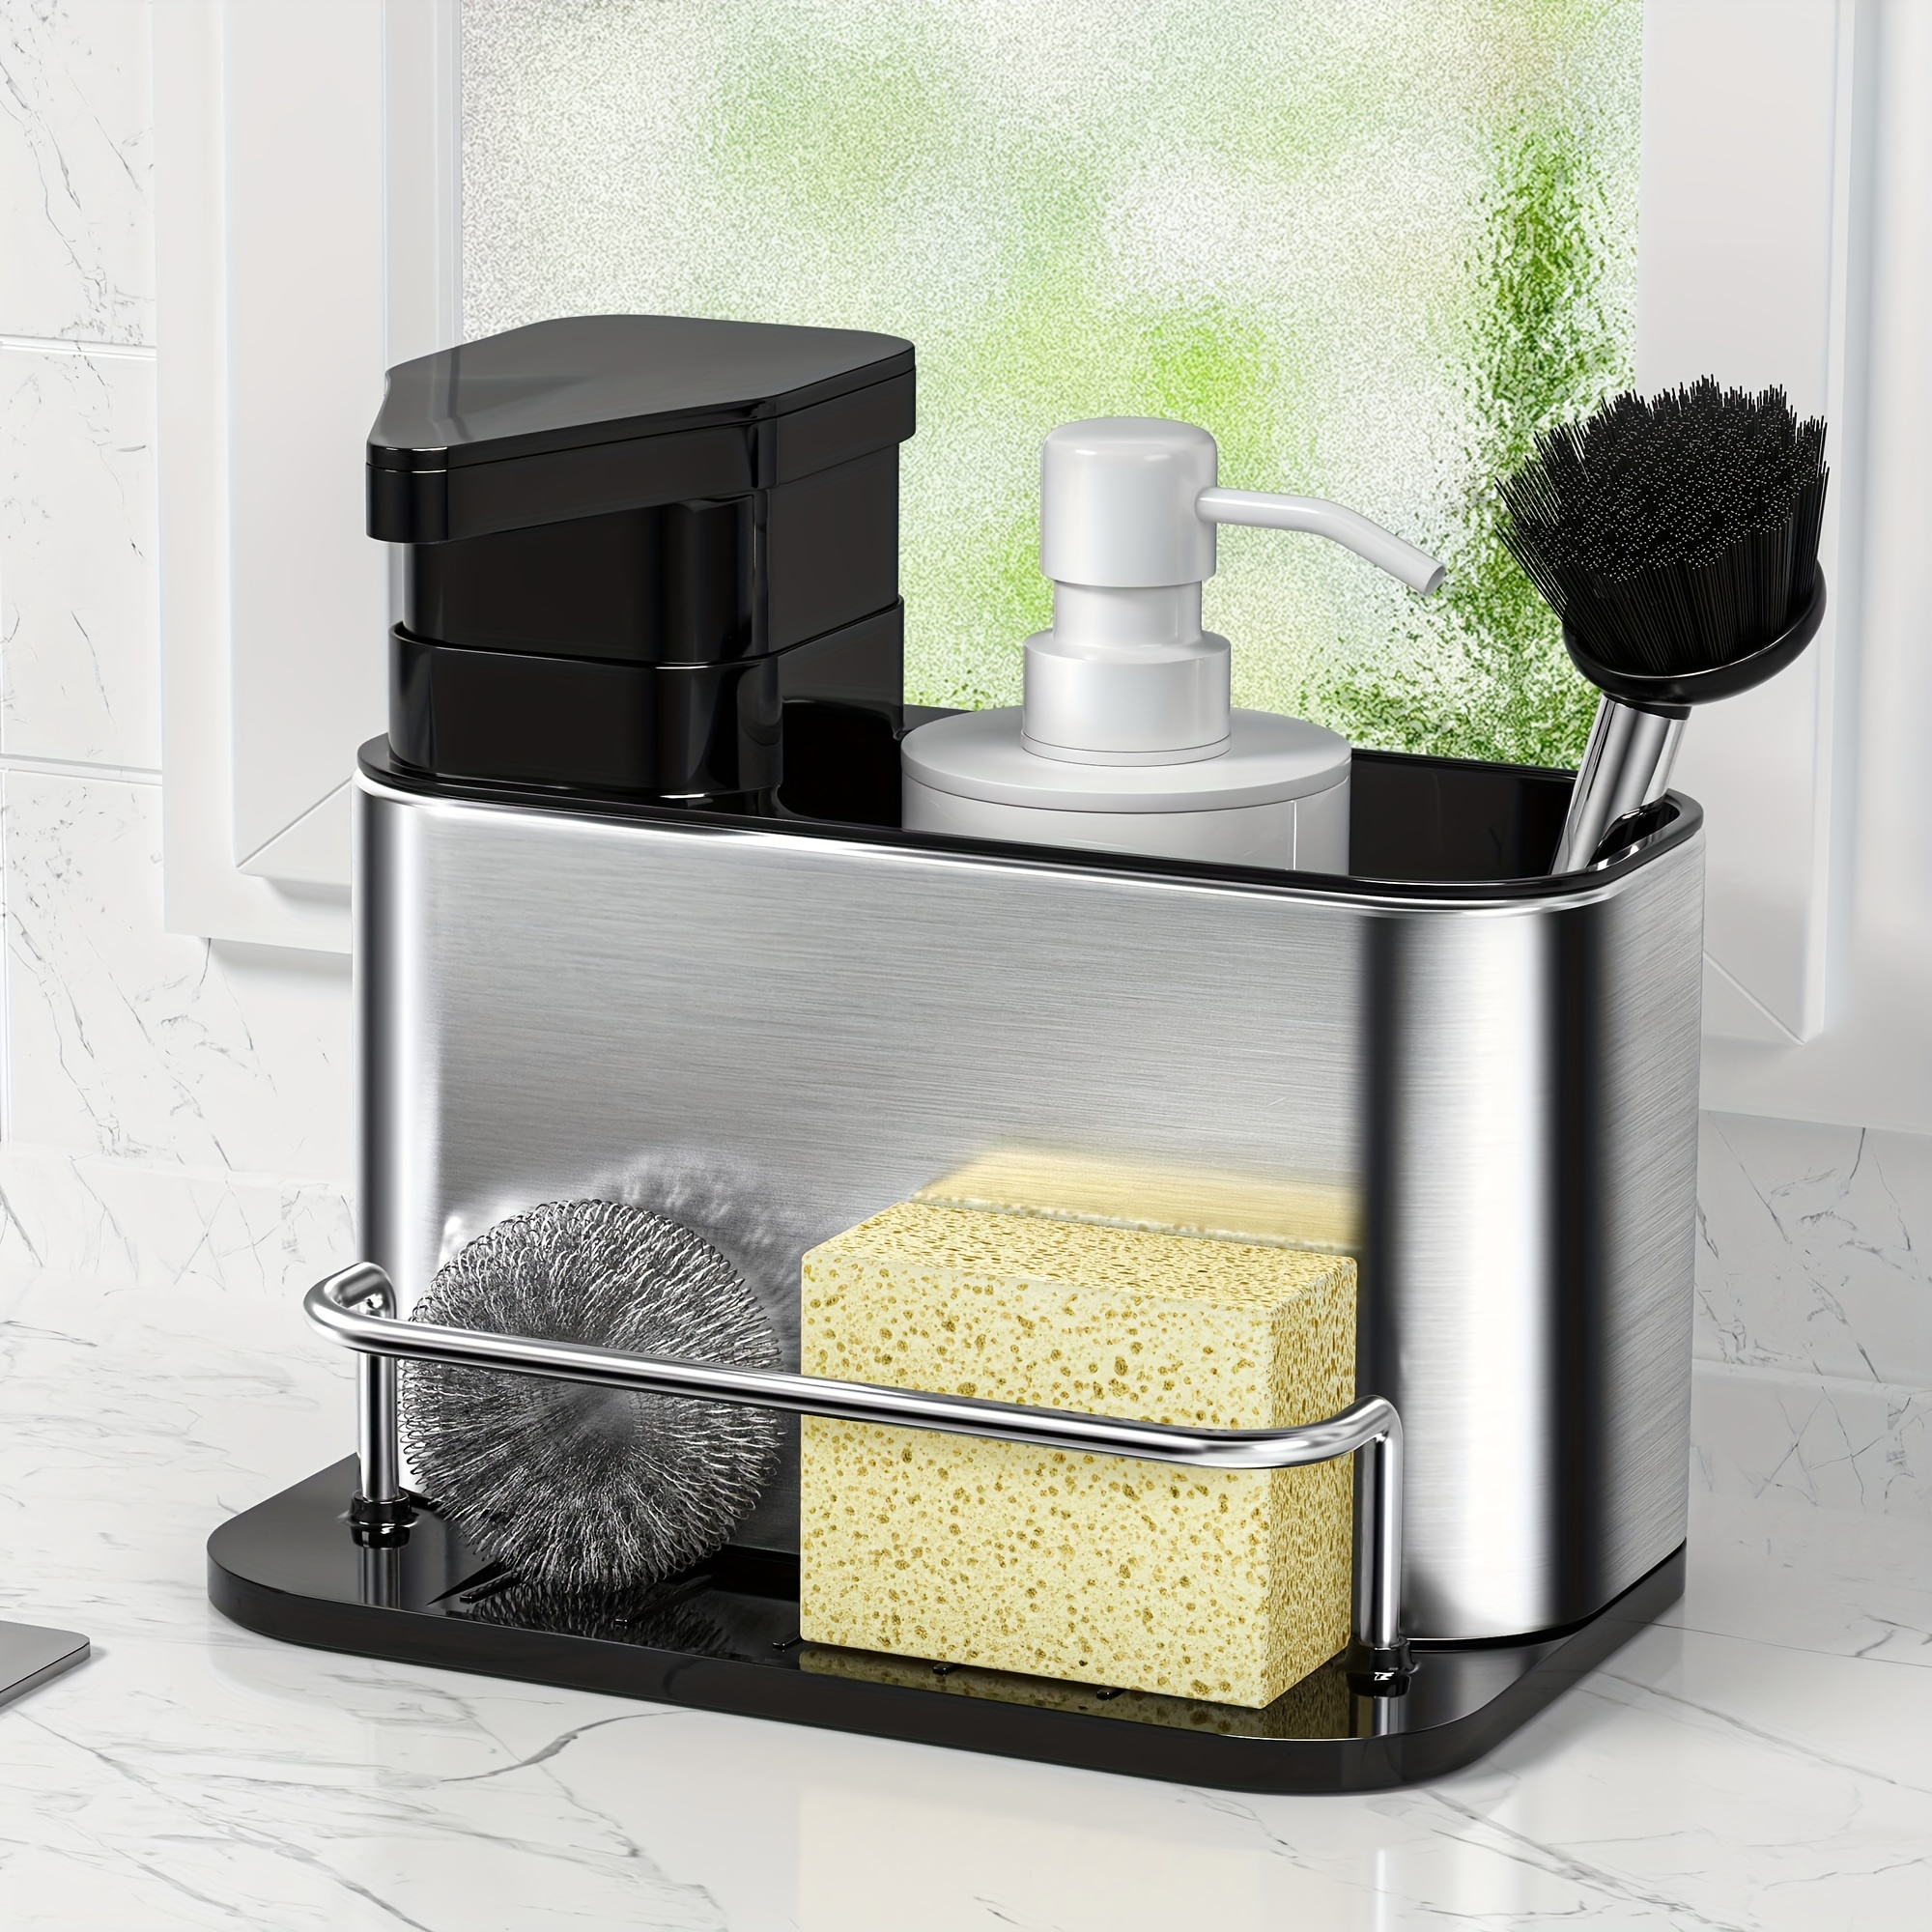  4 in 1 Dish Soap Dispenser and Sponge Holder Set for Kitchen  Sink with Soap Dispensing Dish Brush, Sink Tray, Scrub Sponge, Brush Head :  Health & Household